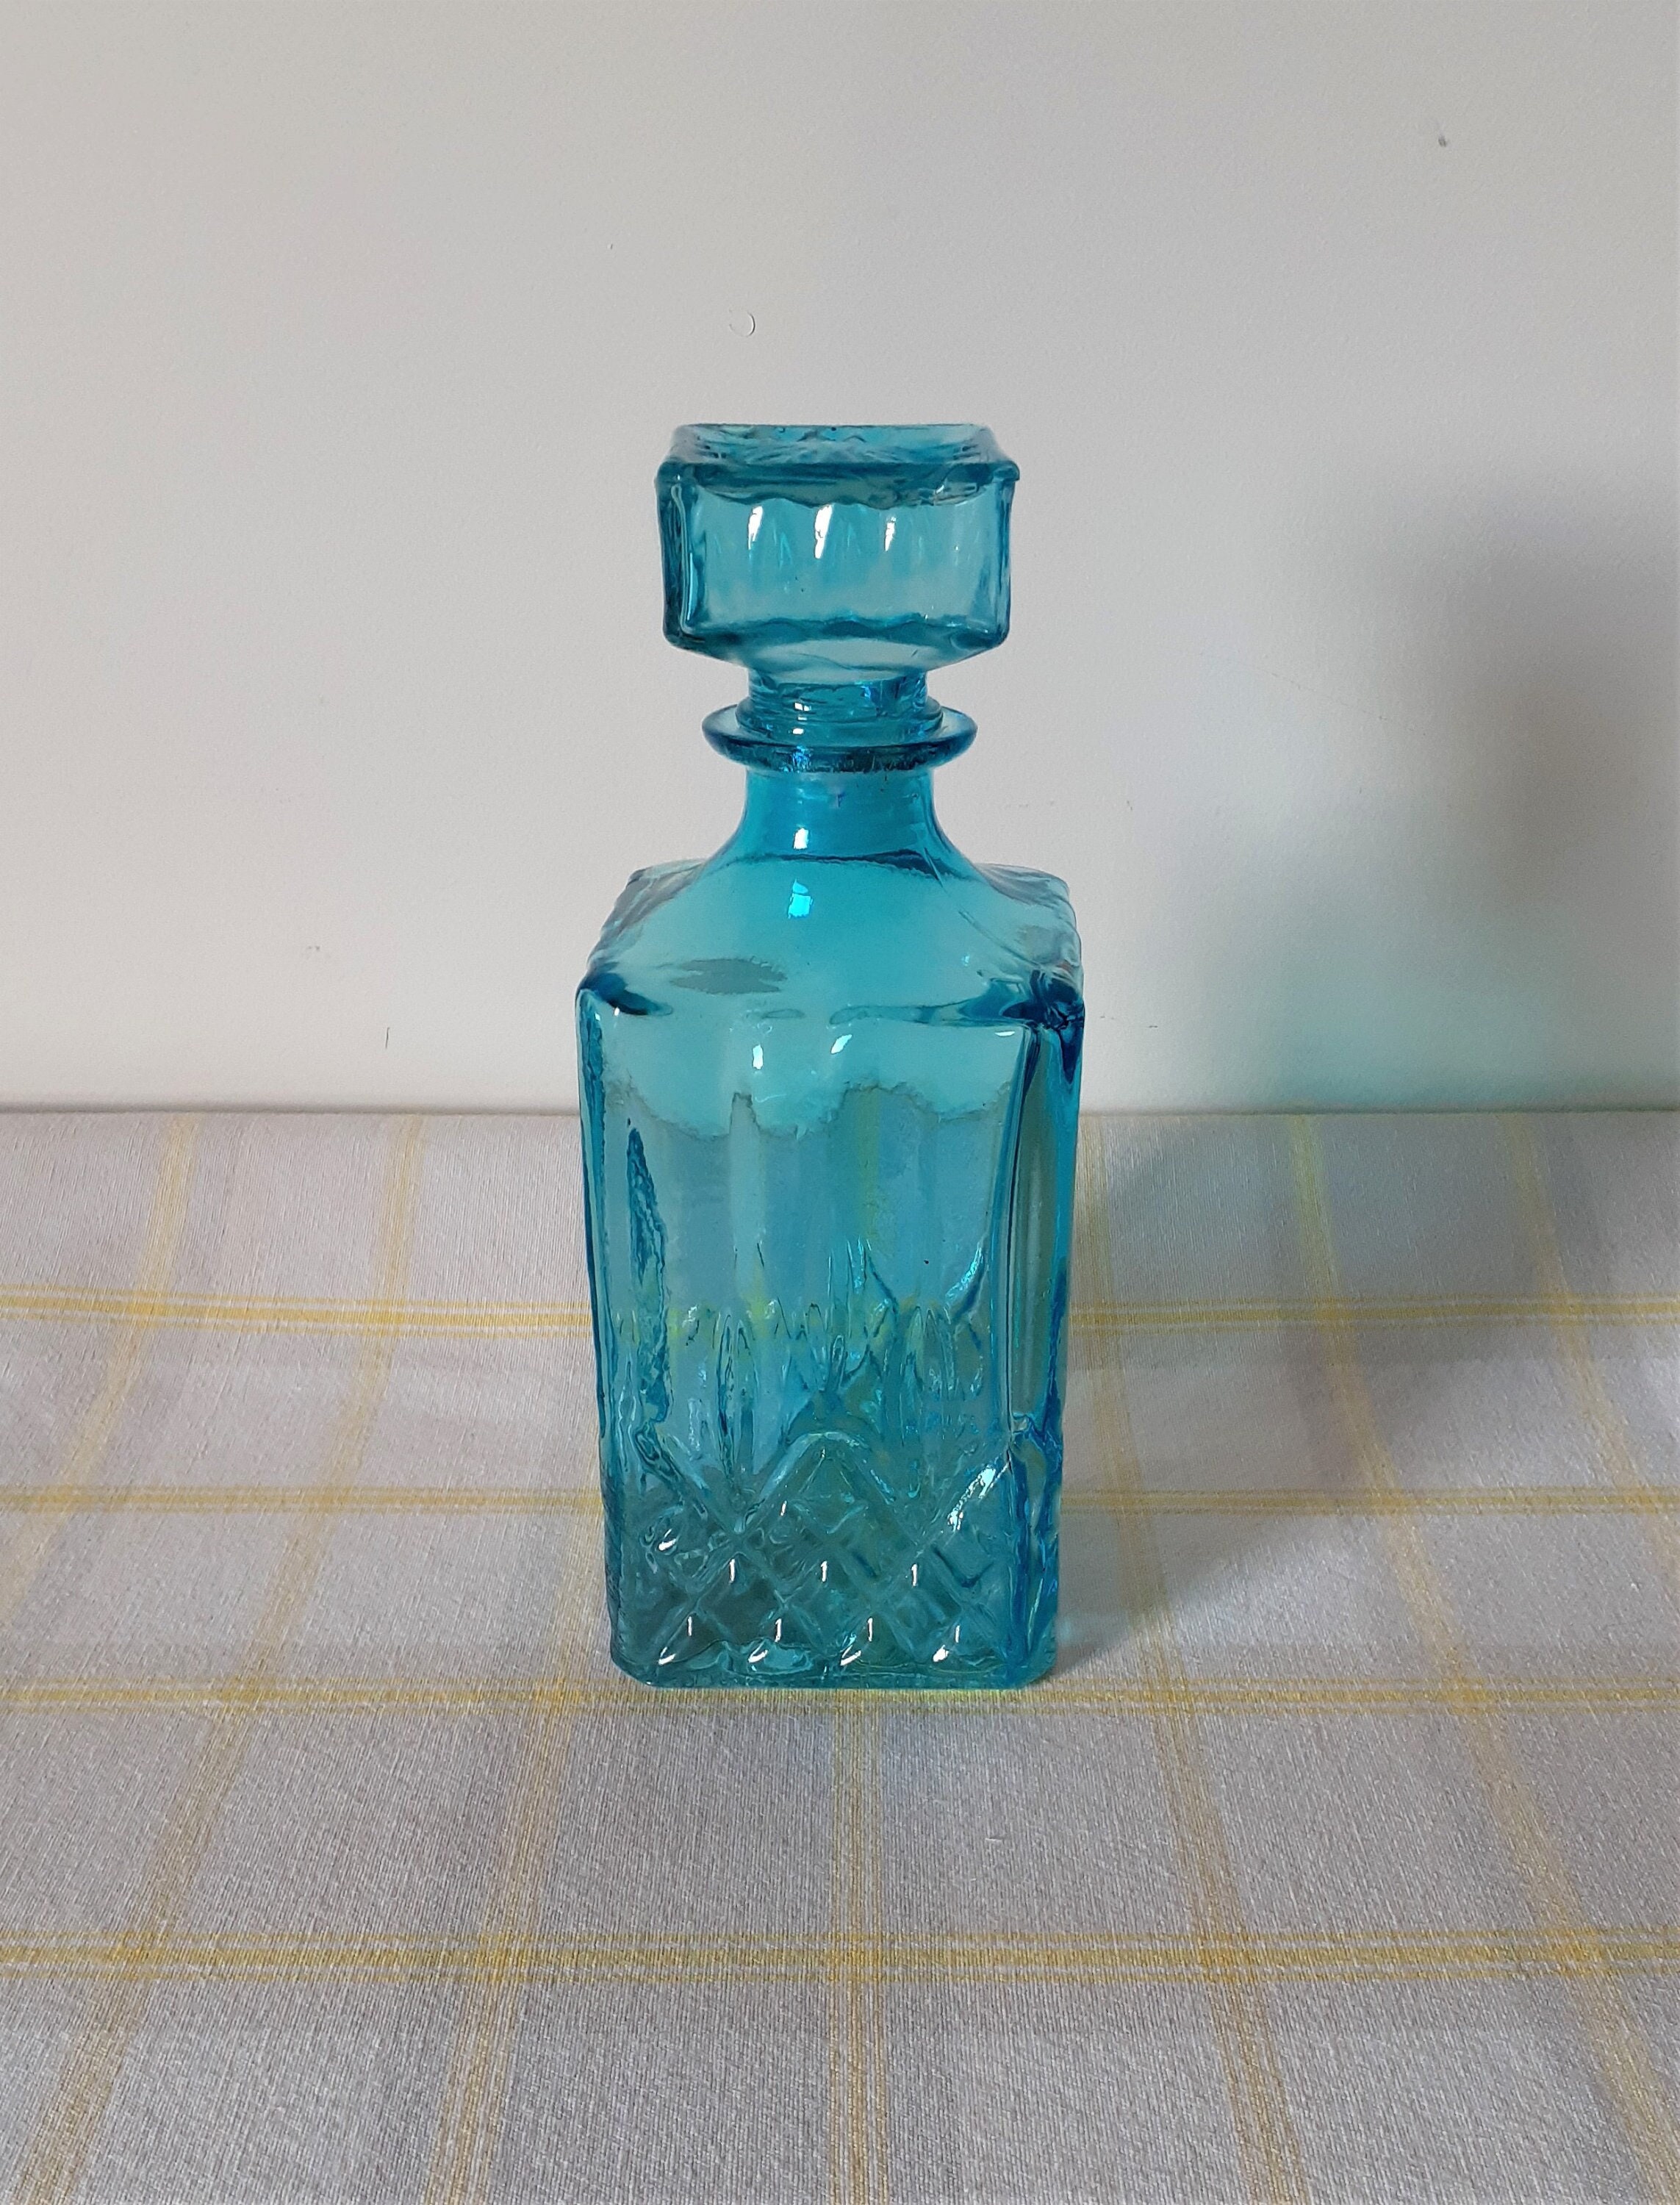 Wax Drip Genie Bottles Vintage Italian Glass Decanters in a